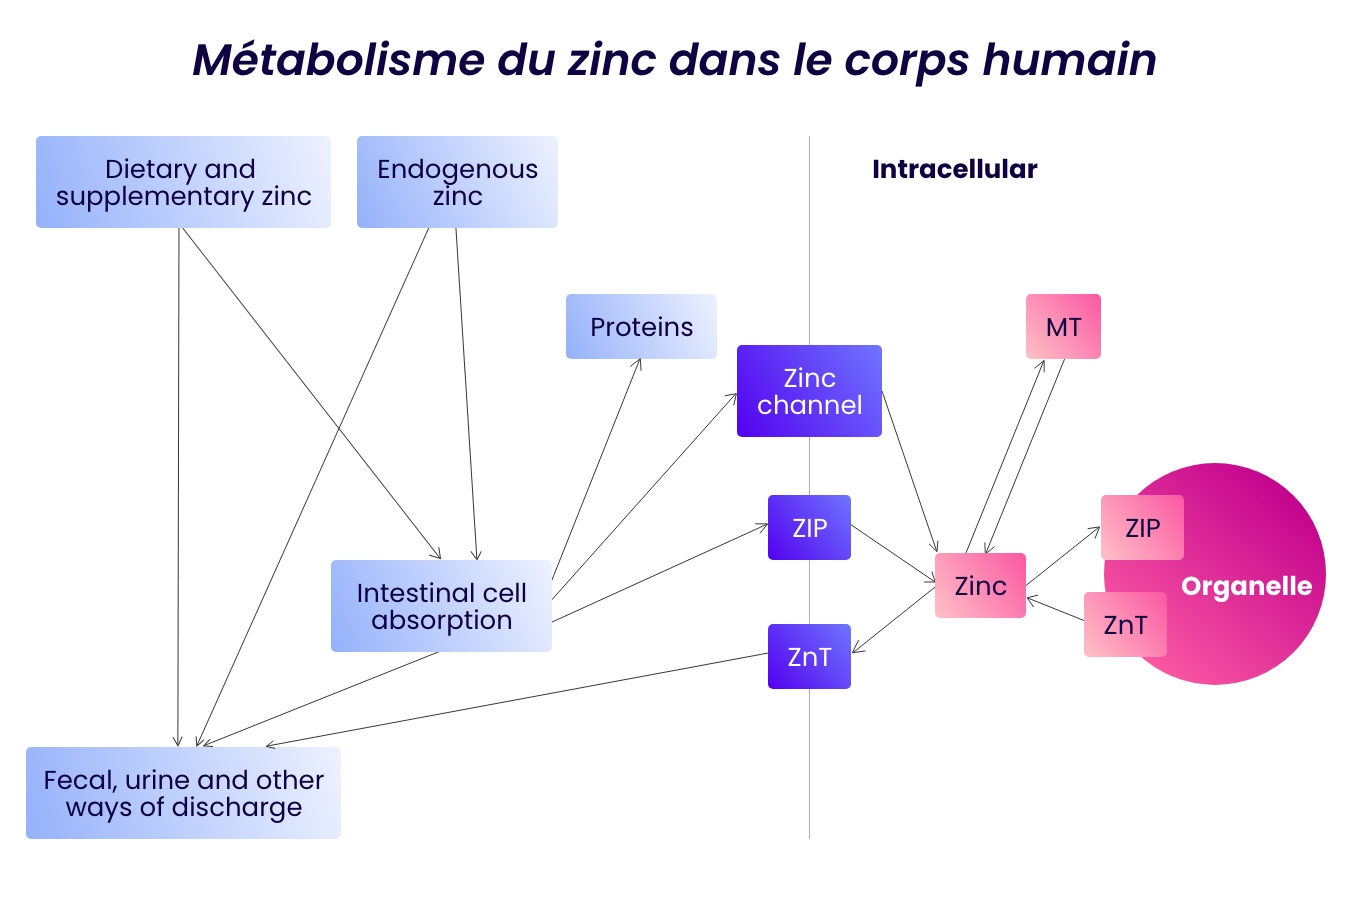 Metabolisme-zinc-corps-humain-FR